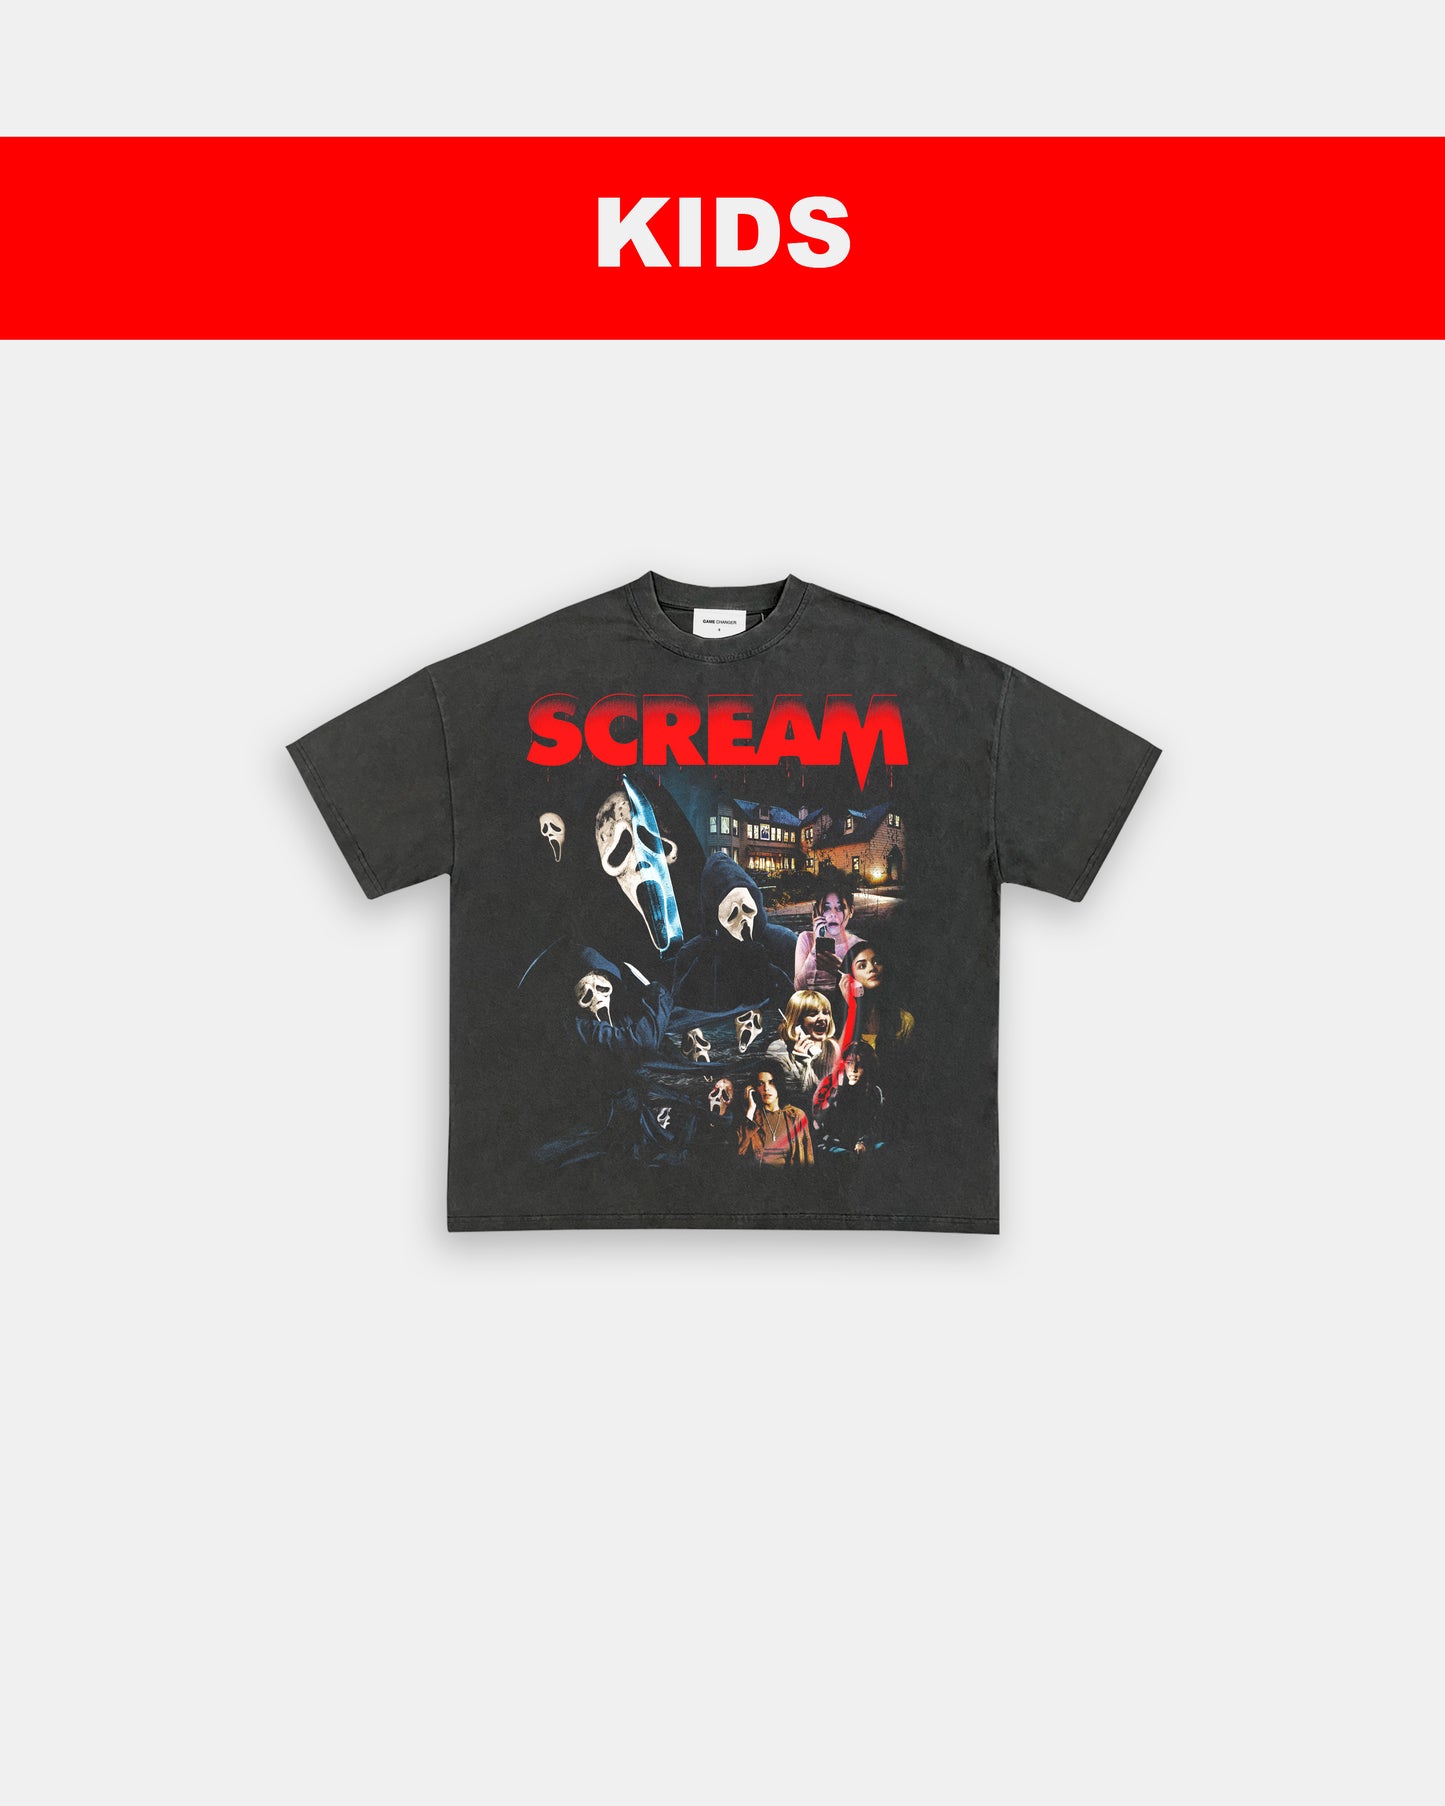 SCREAM V2 - KIDS TEE